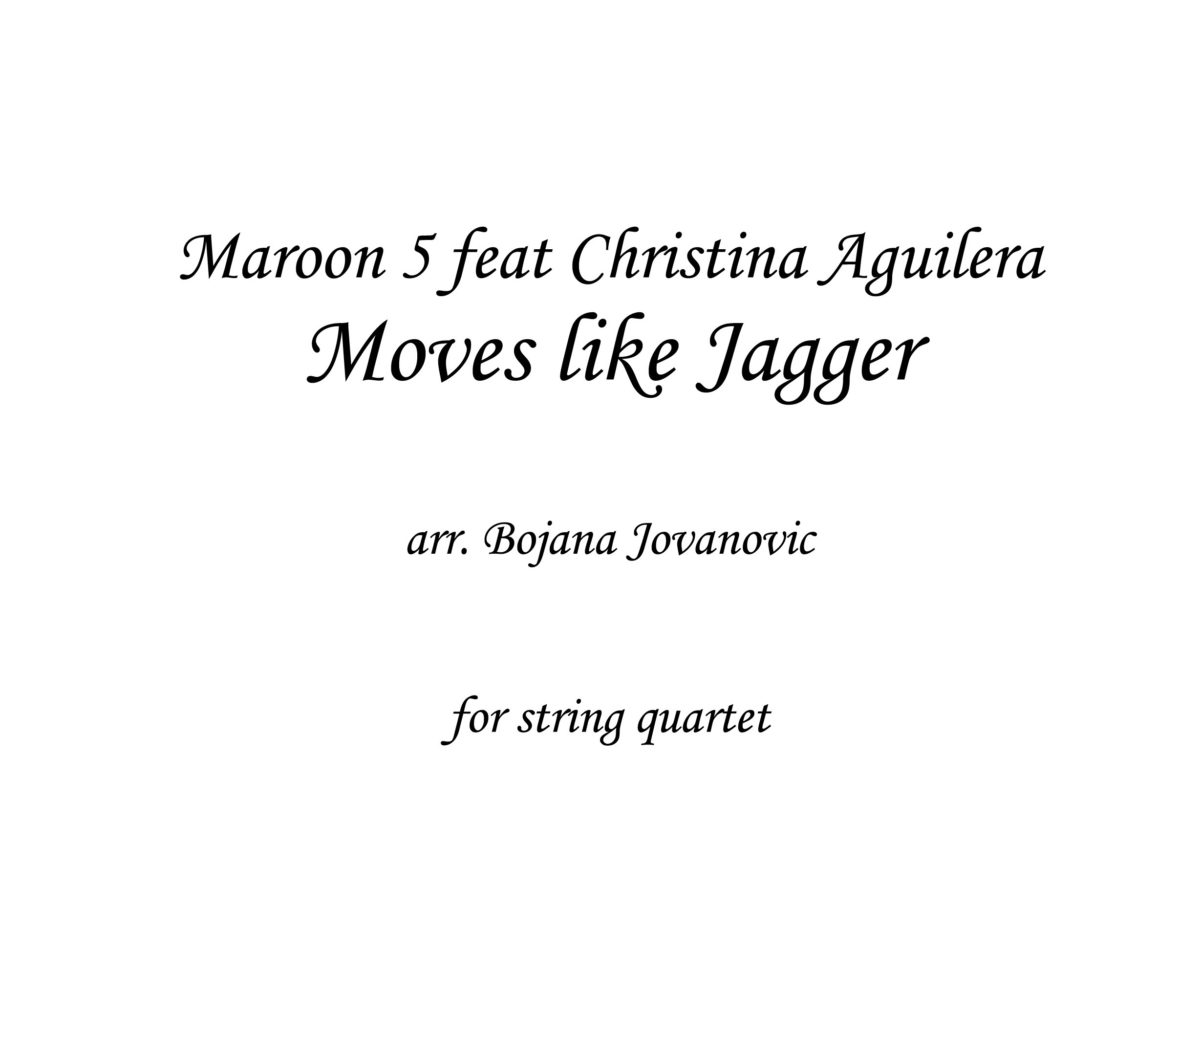 Moves like Jagger (Maroon 5) - Sheet Music